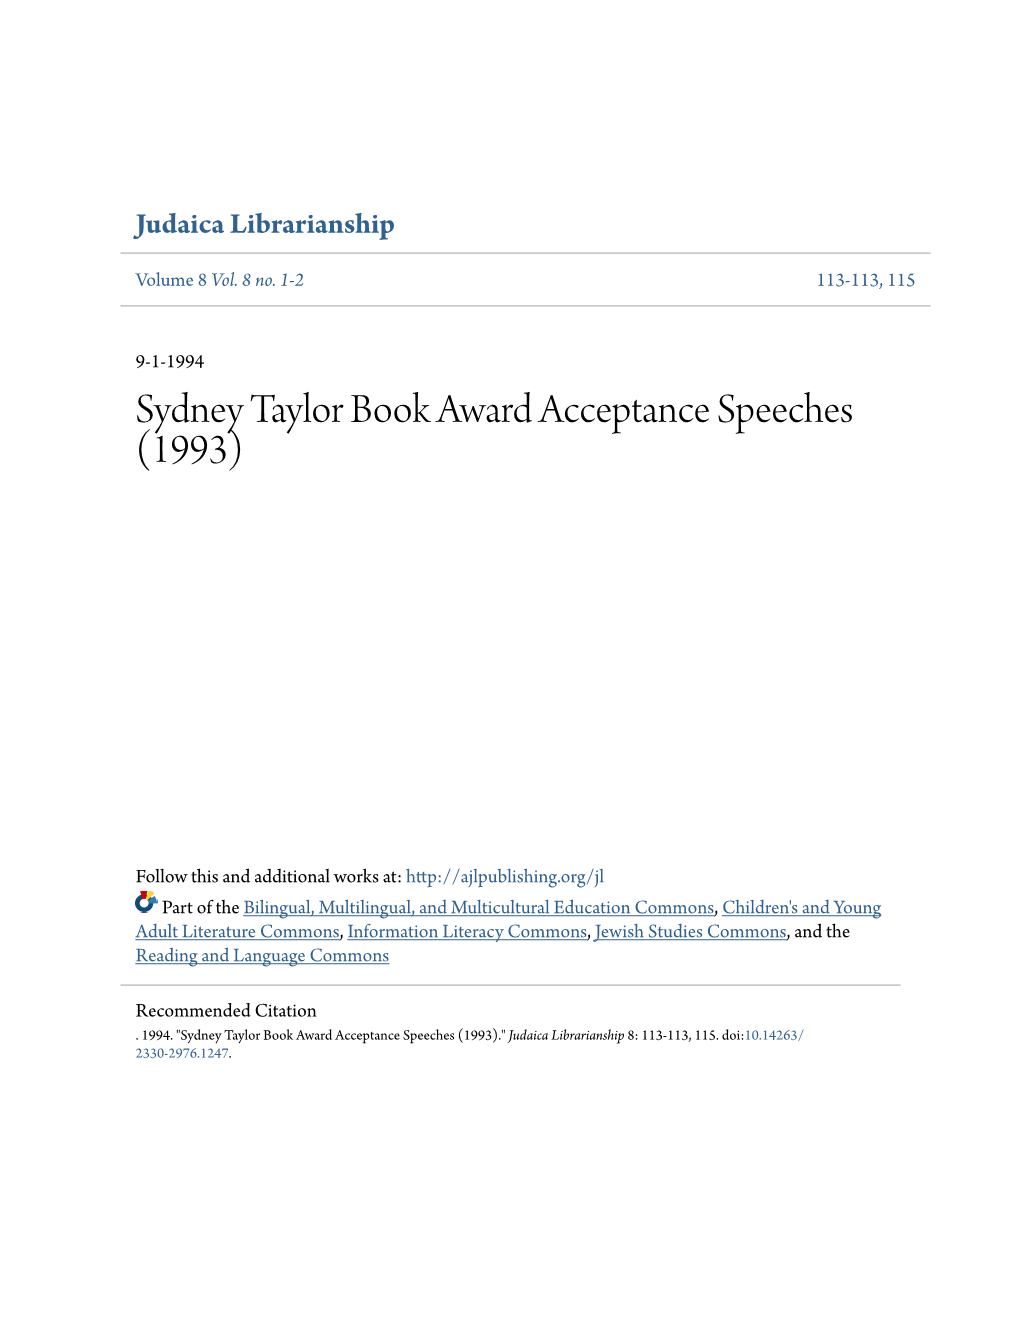 Sydney Taylor Book Award Acceptance Speeches (1993)